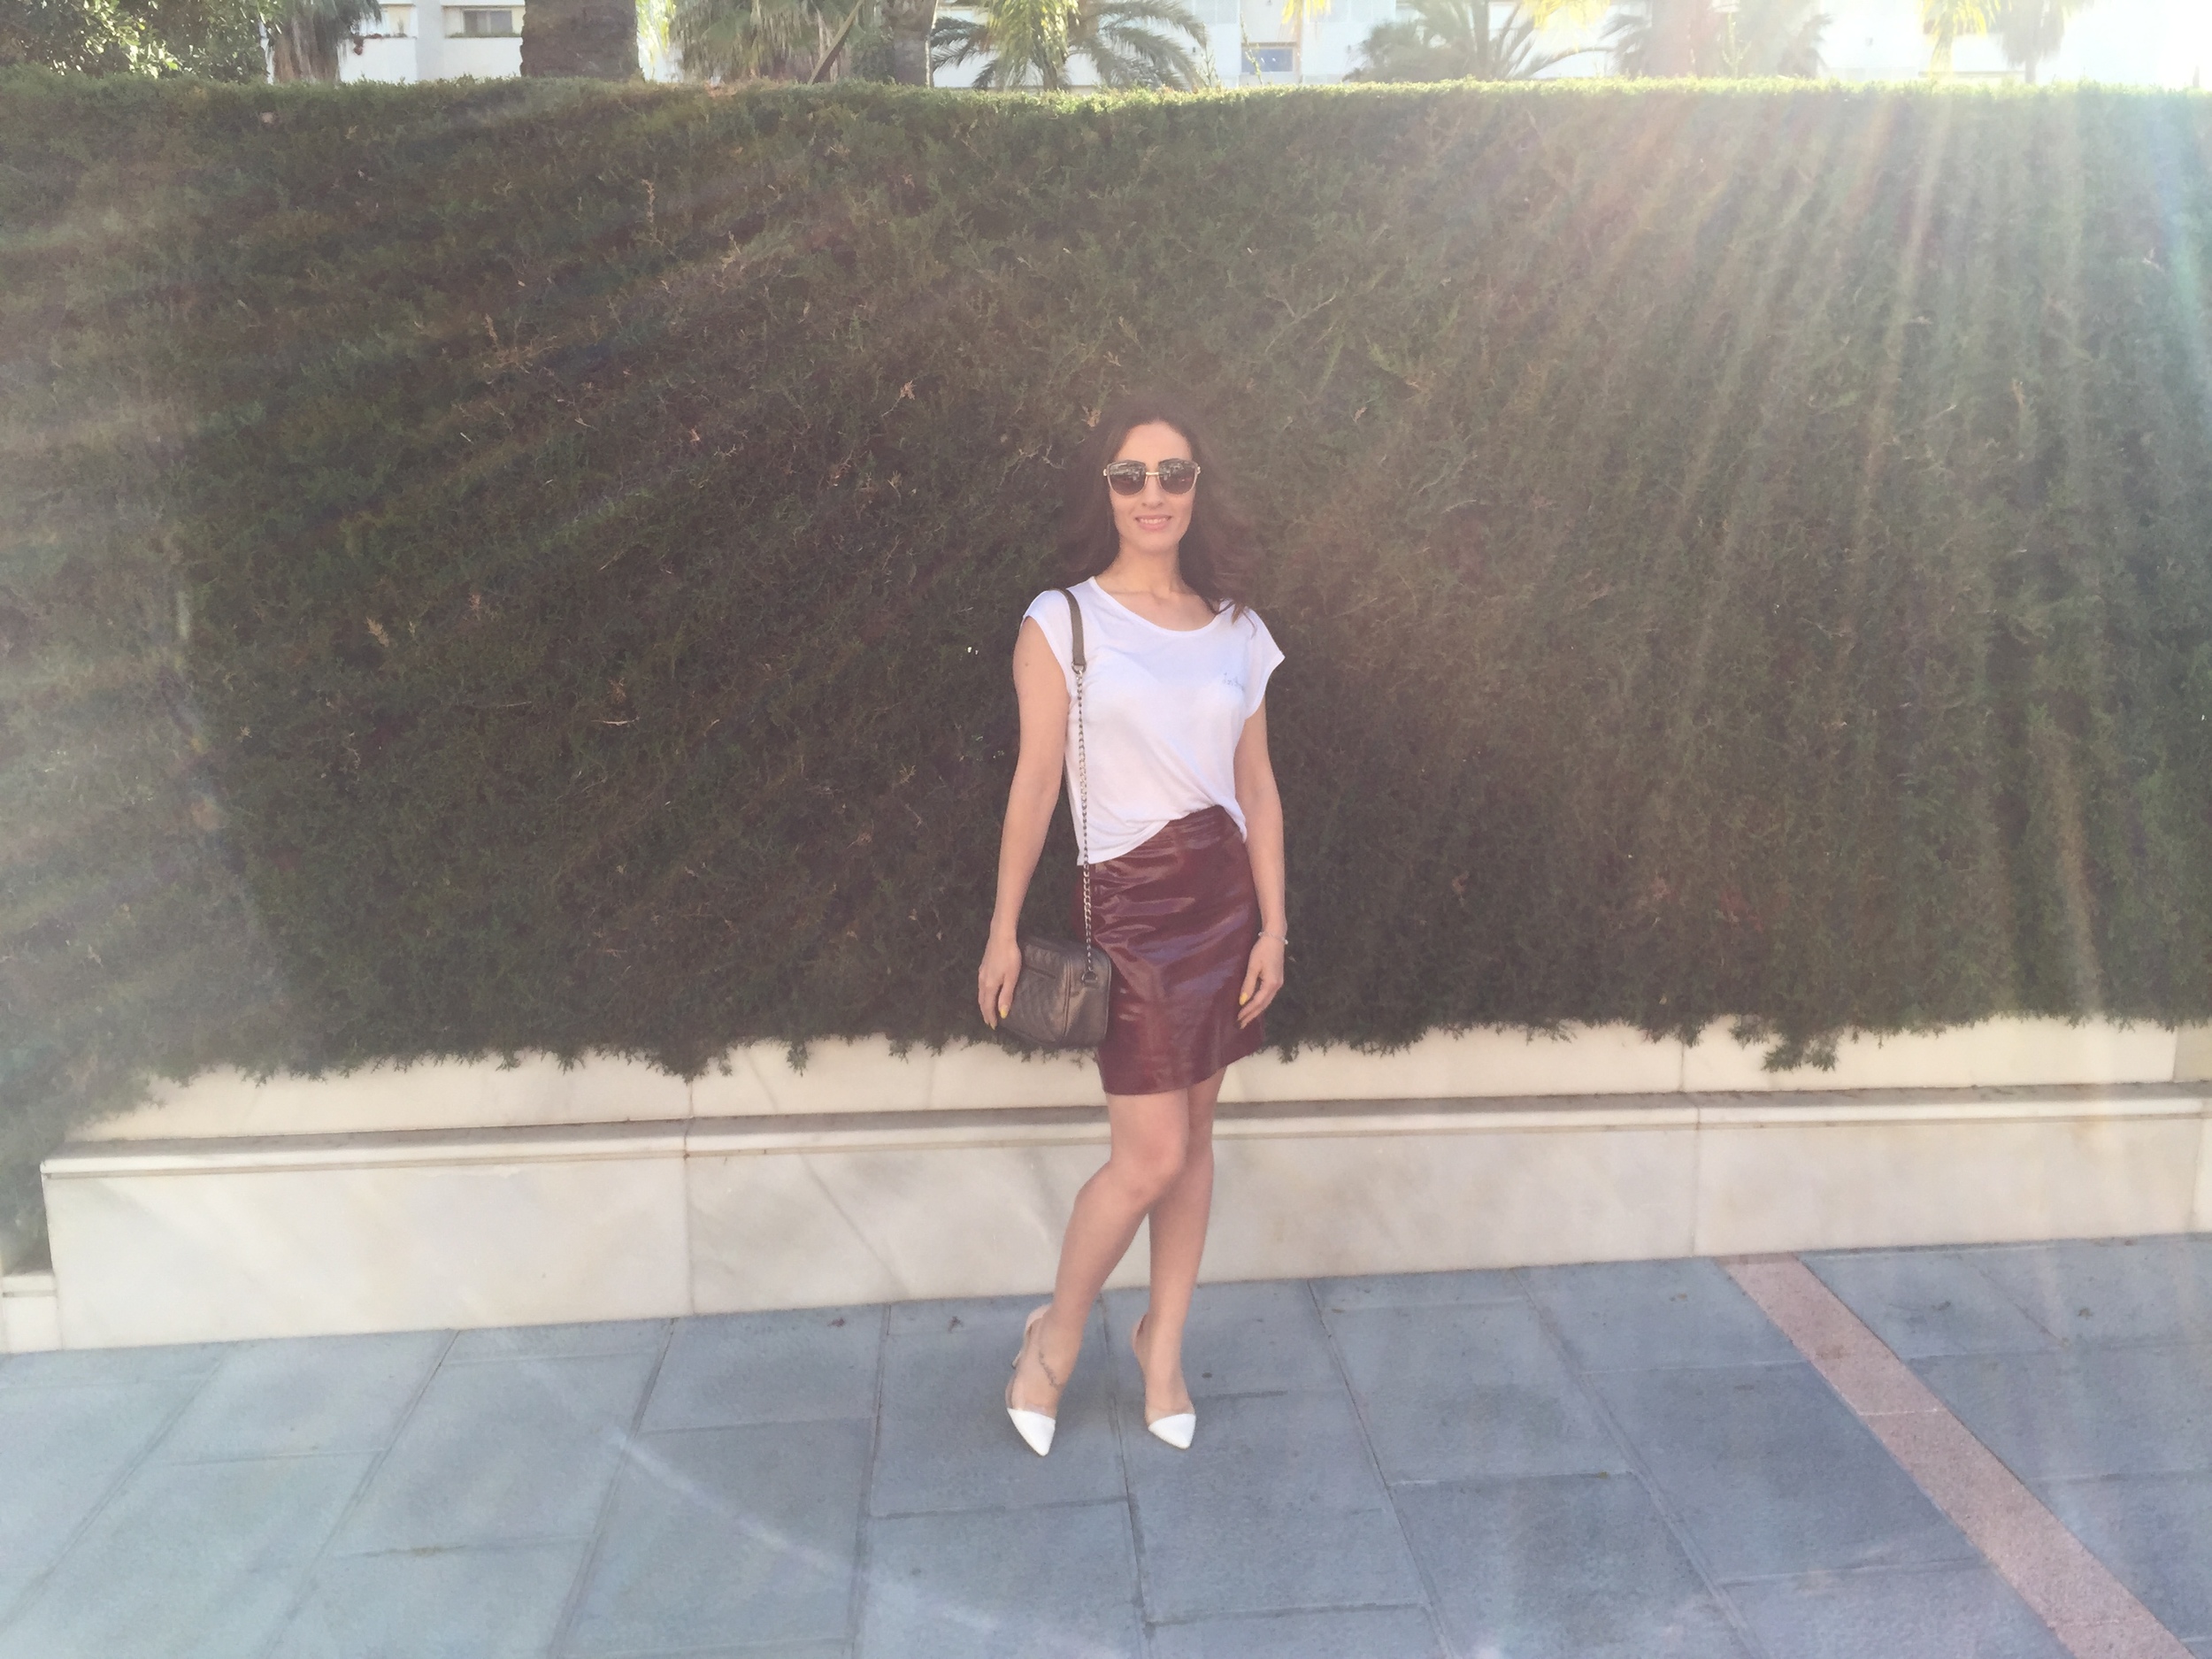   ZARA - Skirt BERSHKA - Top ALIEXPRESS - Clear Heels (  here  ) BERSHKA - Shoulder bag  BLUMARINE  - Sunglasses  